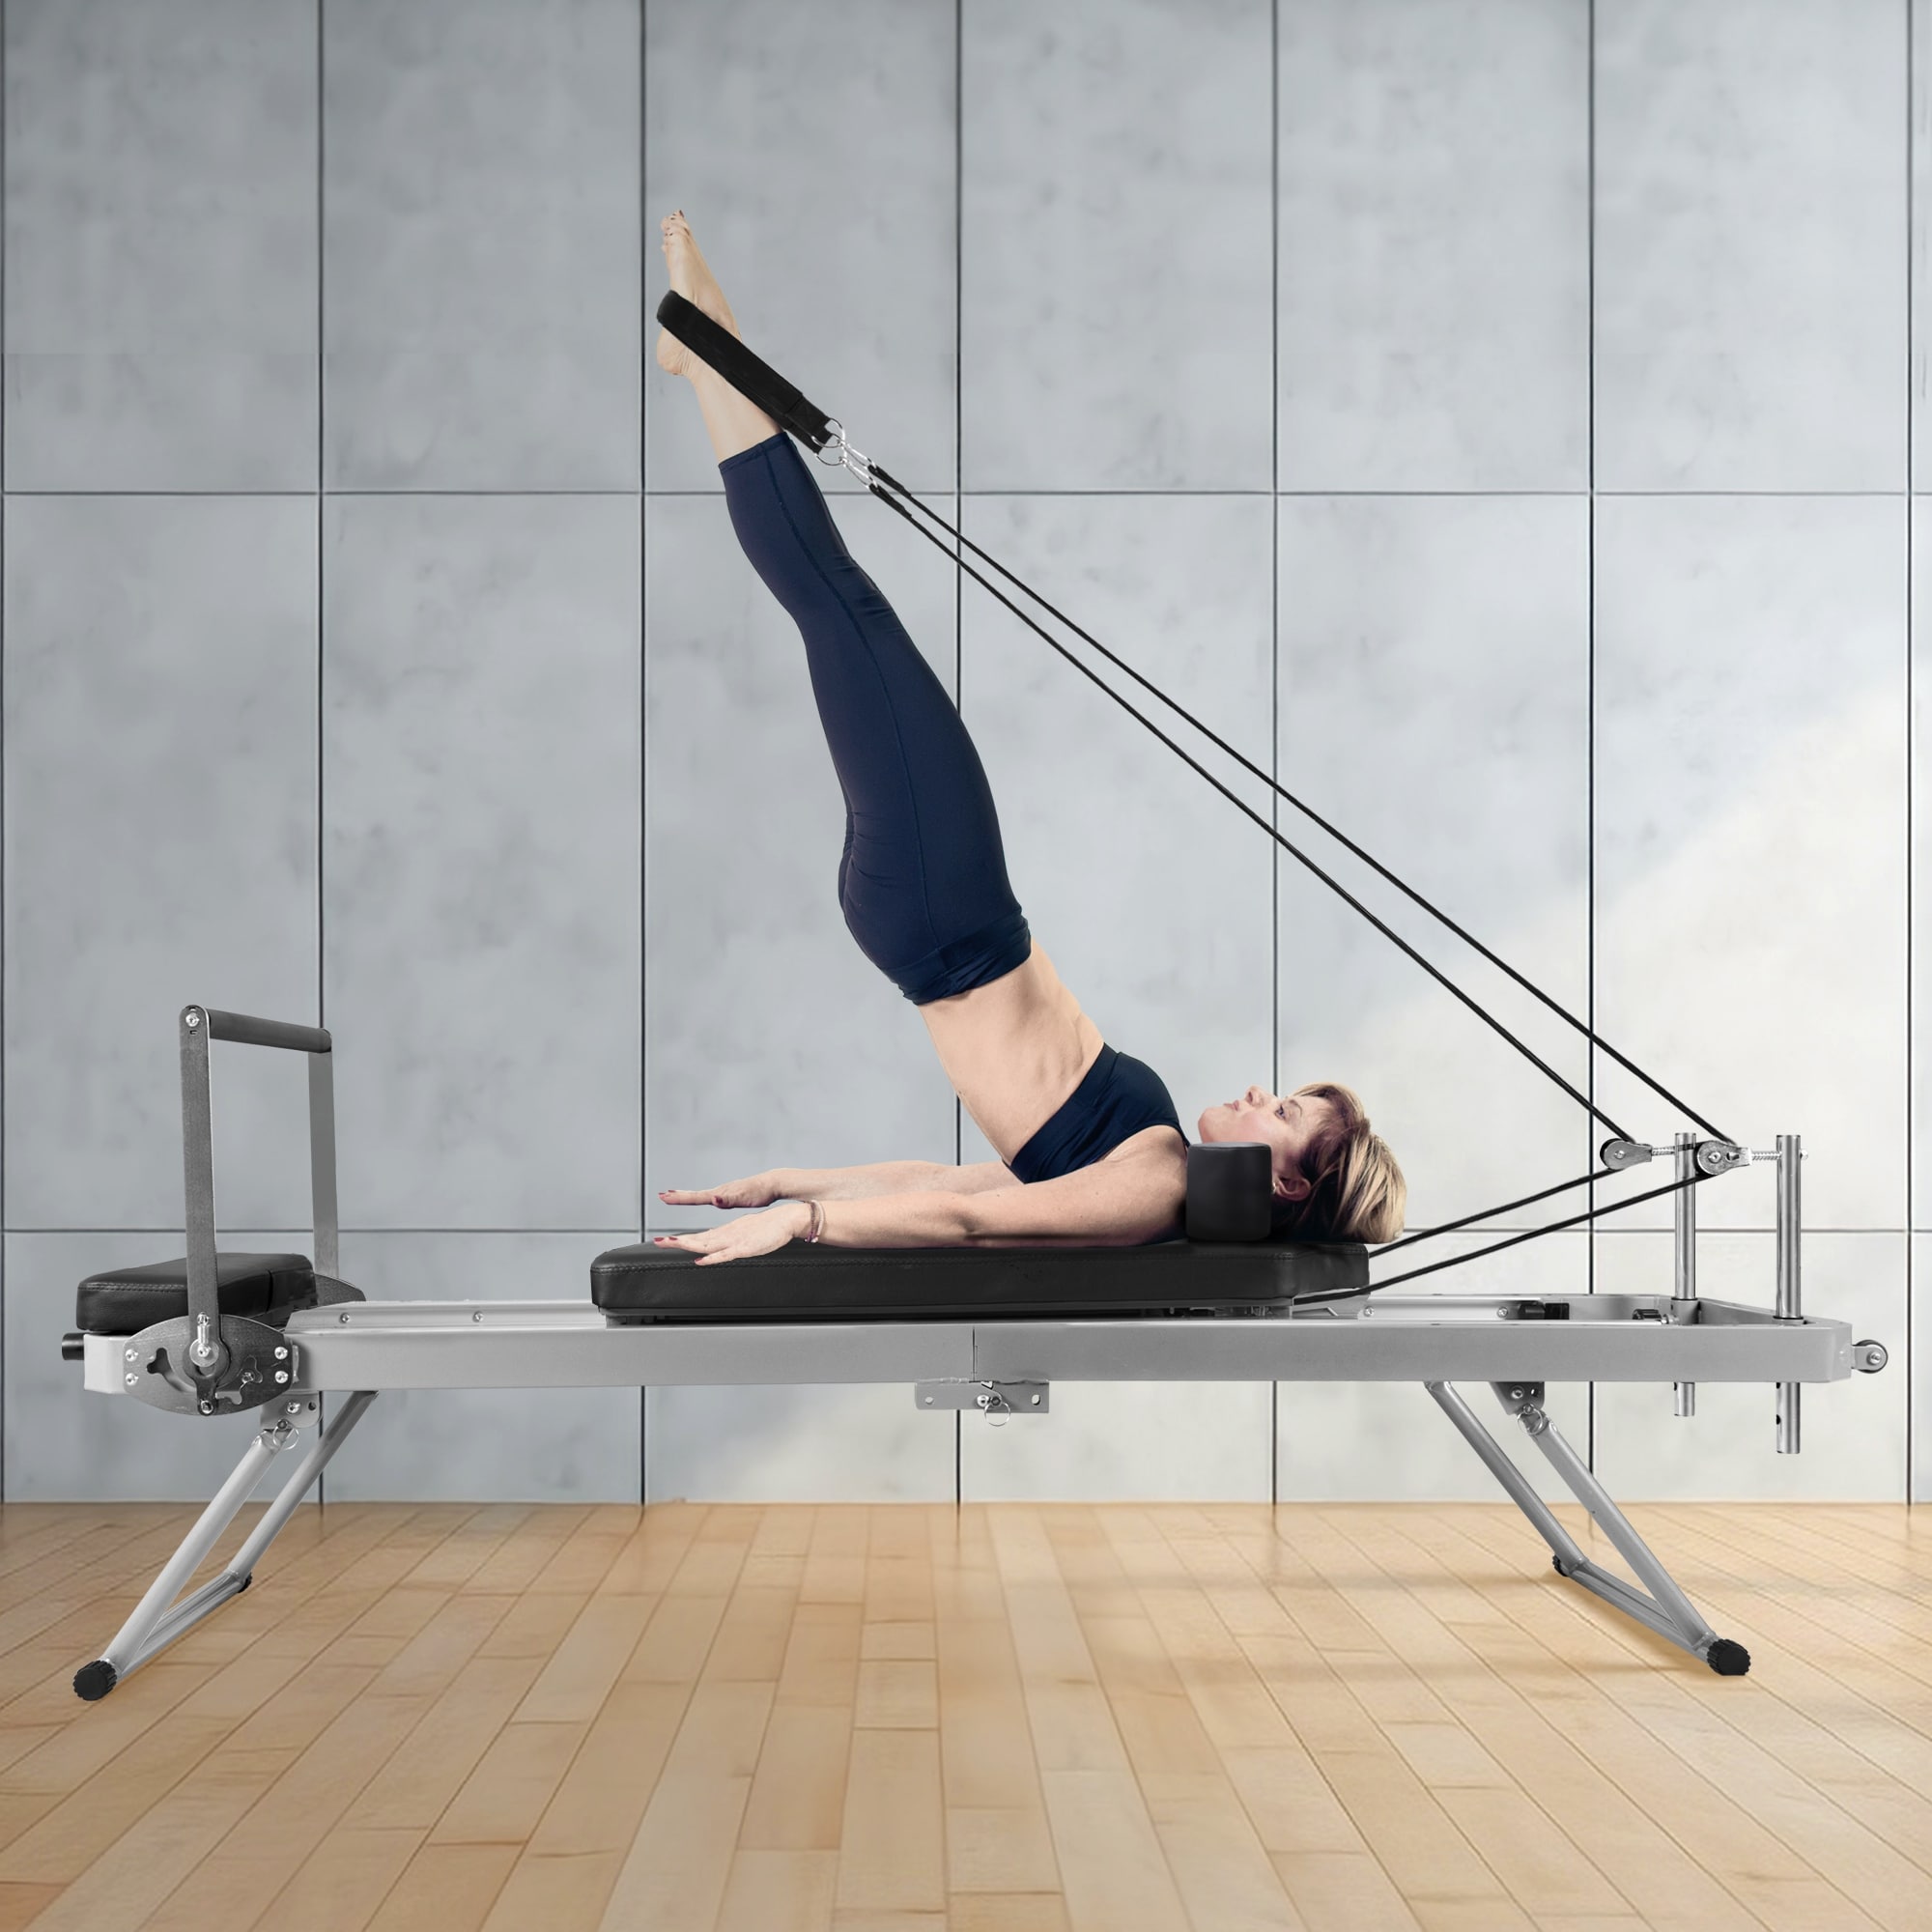 ZENOVA Pilates Reformer，Foldable Pilates Reformer Machine for Home and Gym  Use to Balanced Body - On Sale - Bed Bath & Beyond - 39134582